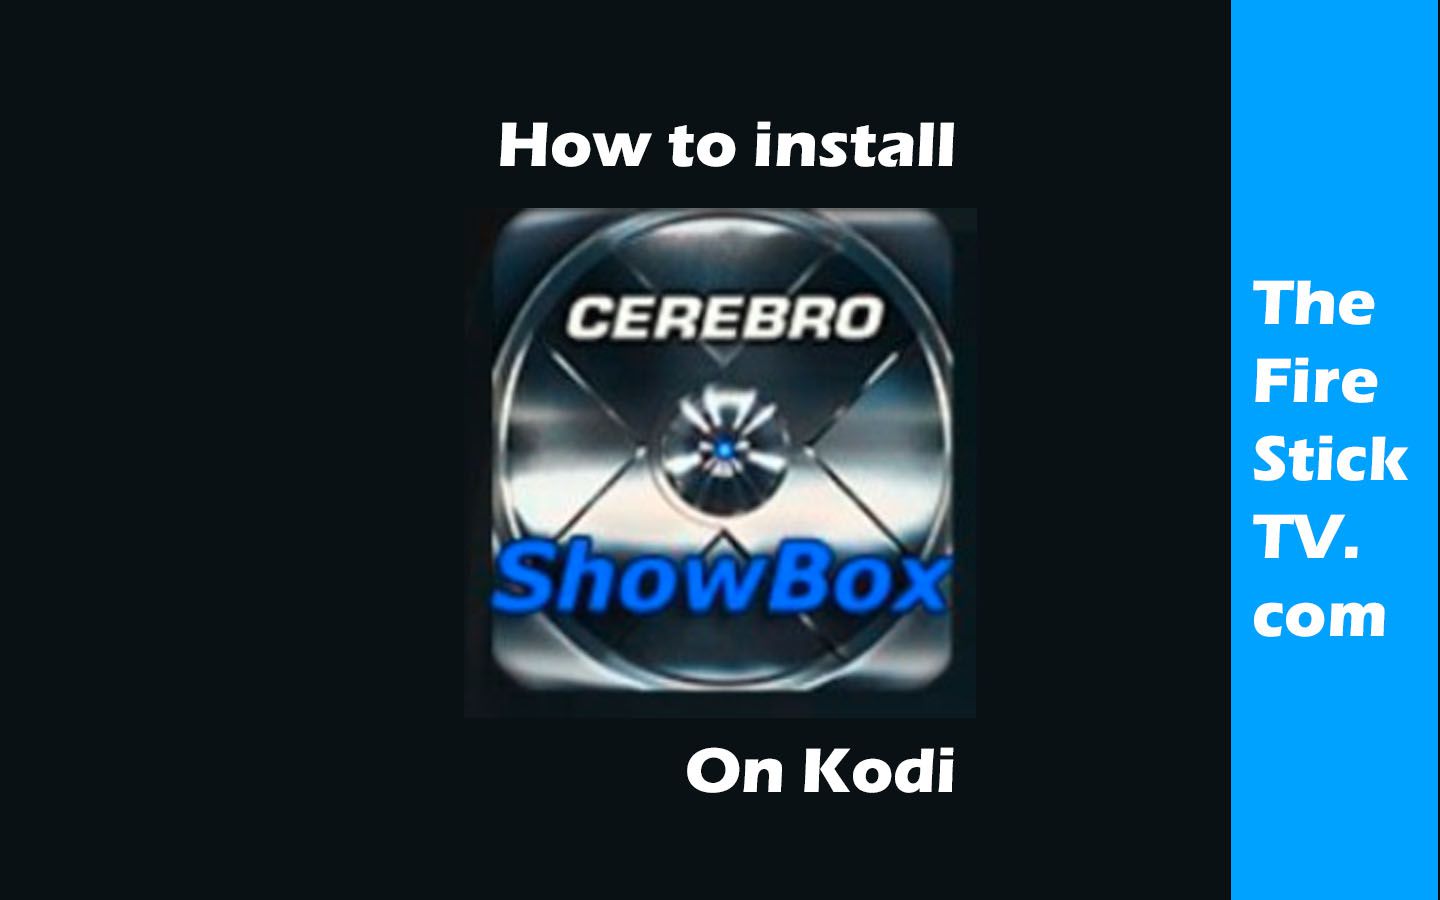 How to Install Cerebro Showbox Addon on Kodi 17.6 Krypton in Easy Steps